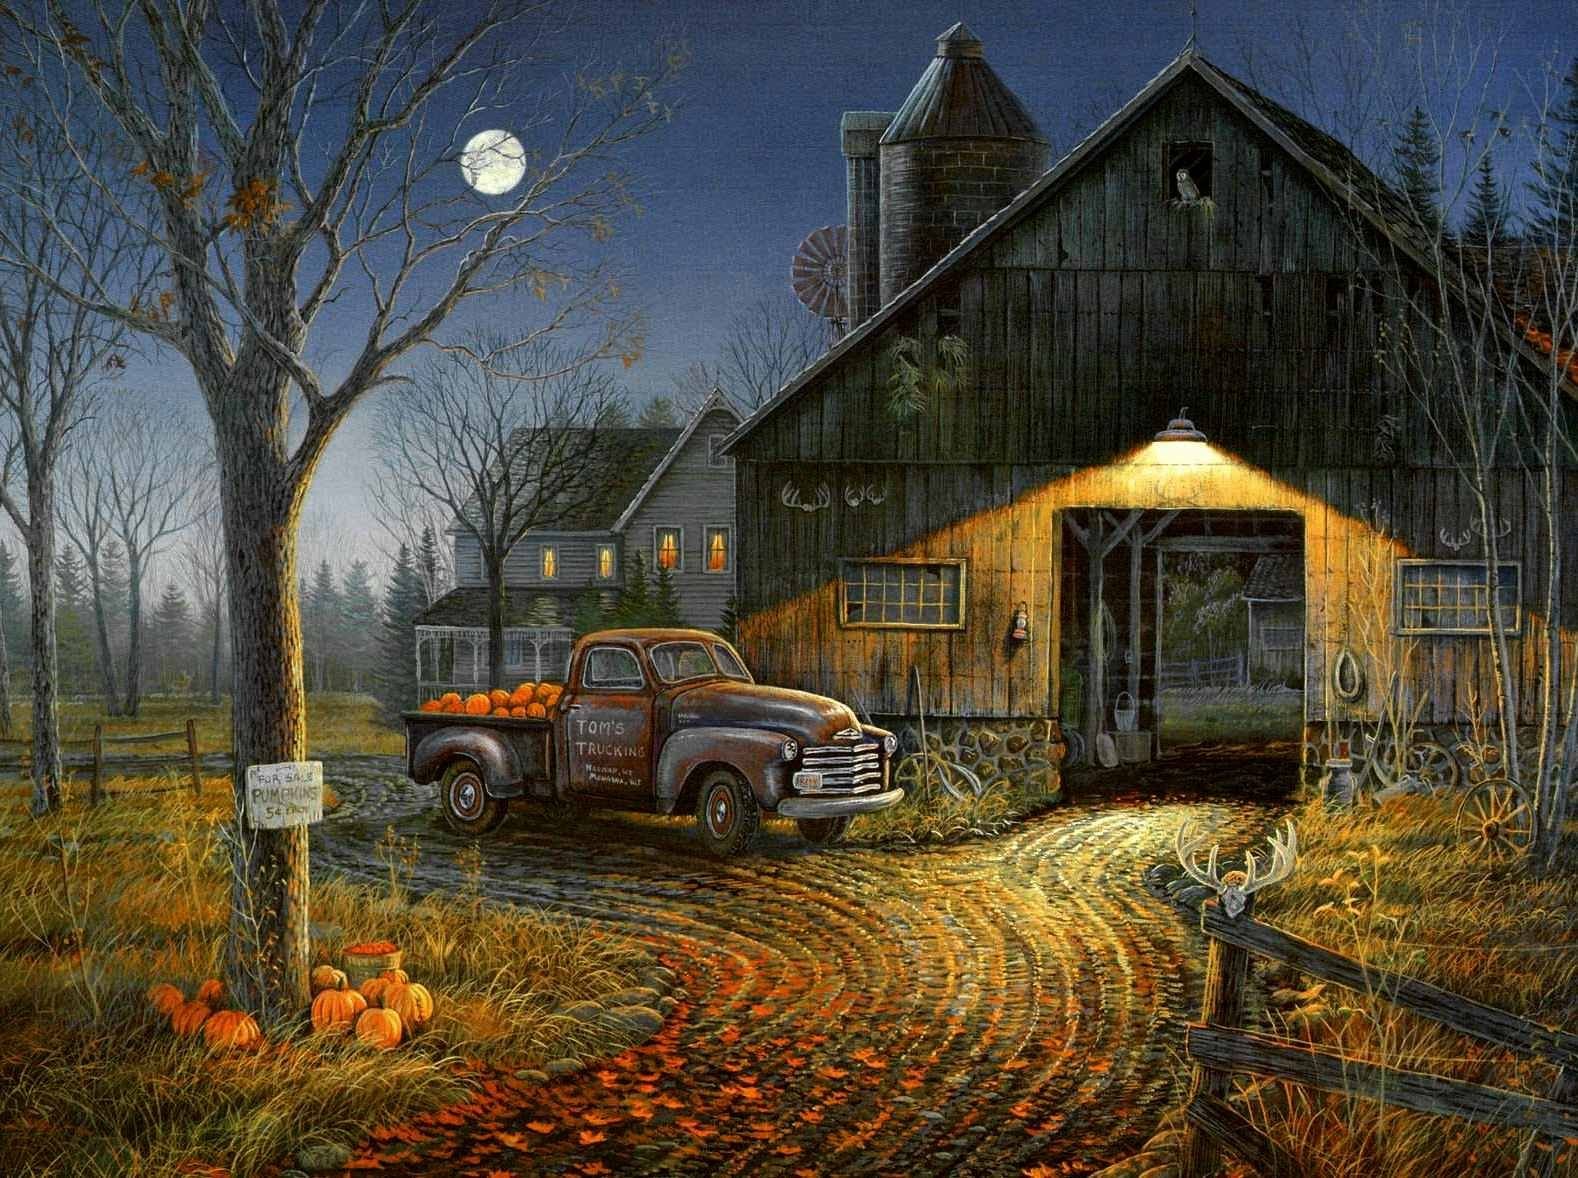 Кантри арт. Сэм Тимм. Сэм Тимм (Sam Timm). Sam Timm американский художник. Осень в деревне картины художников.